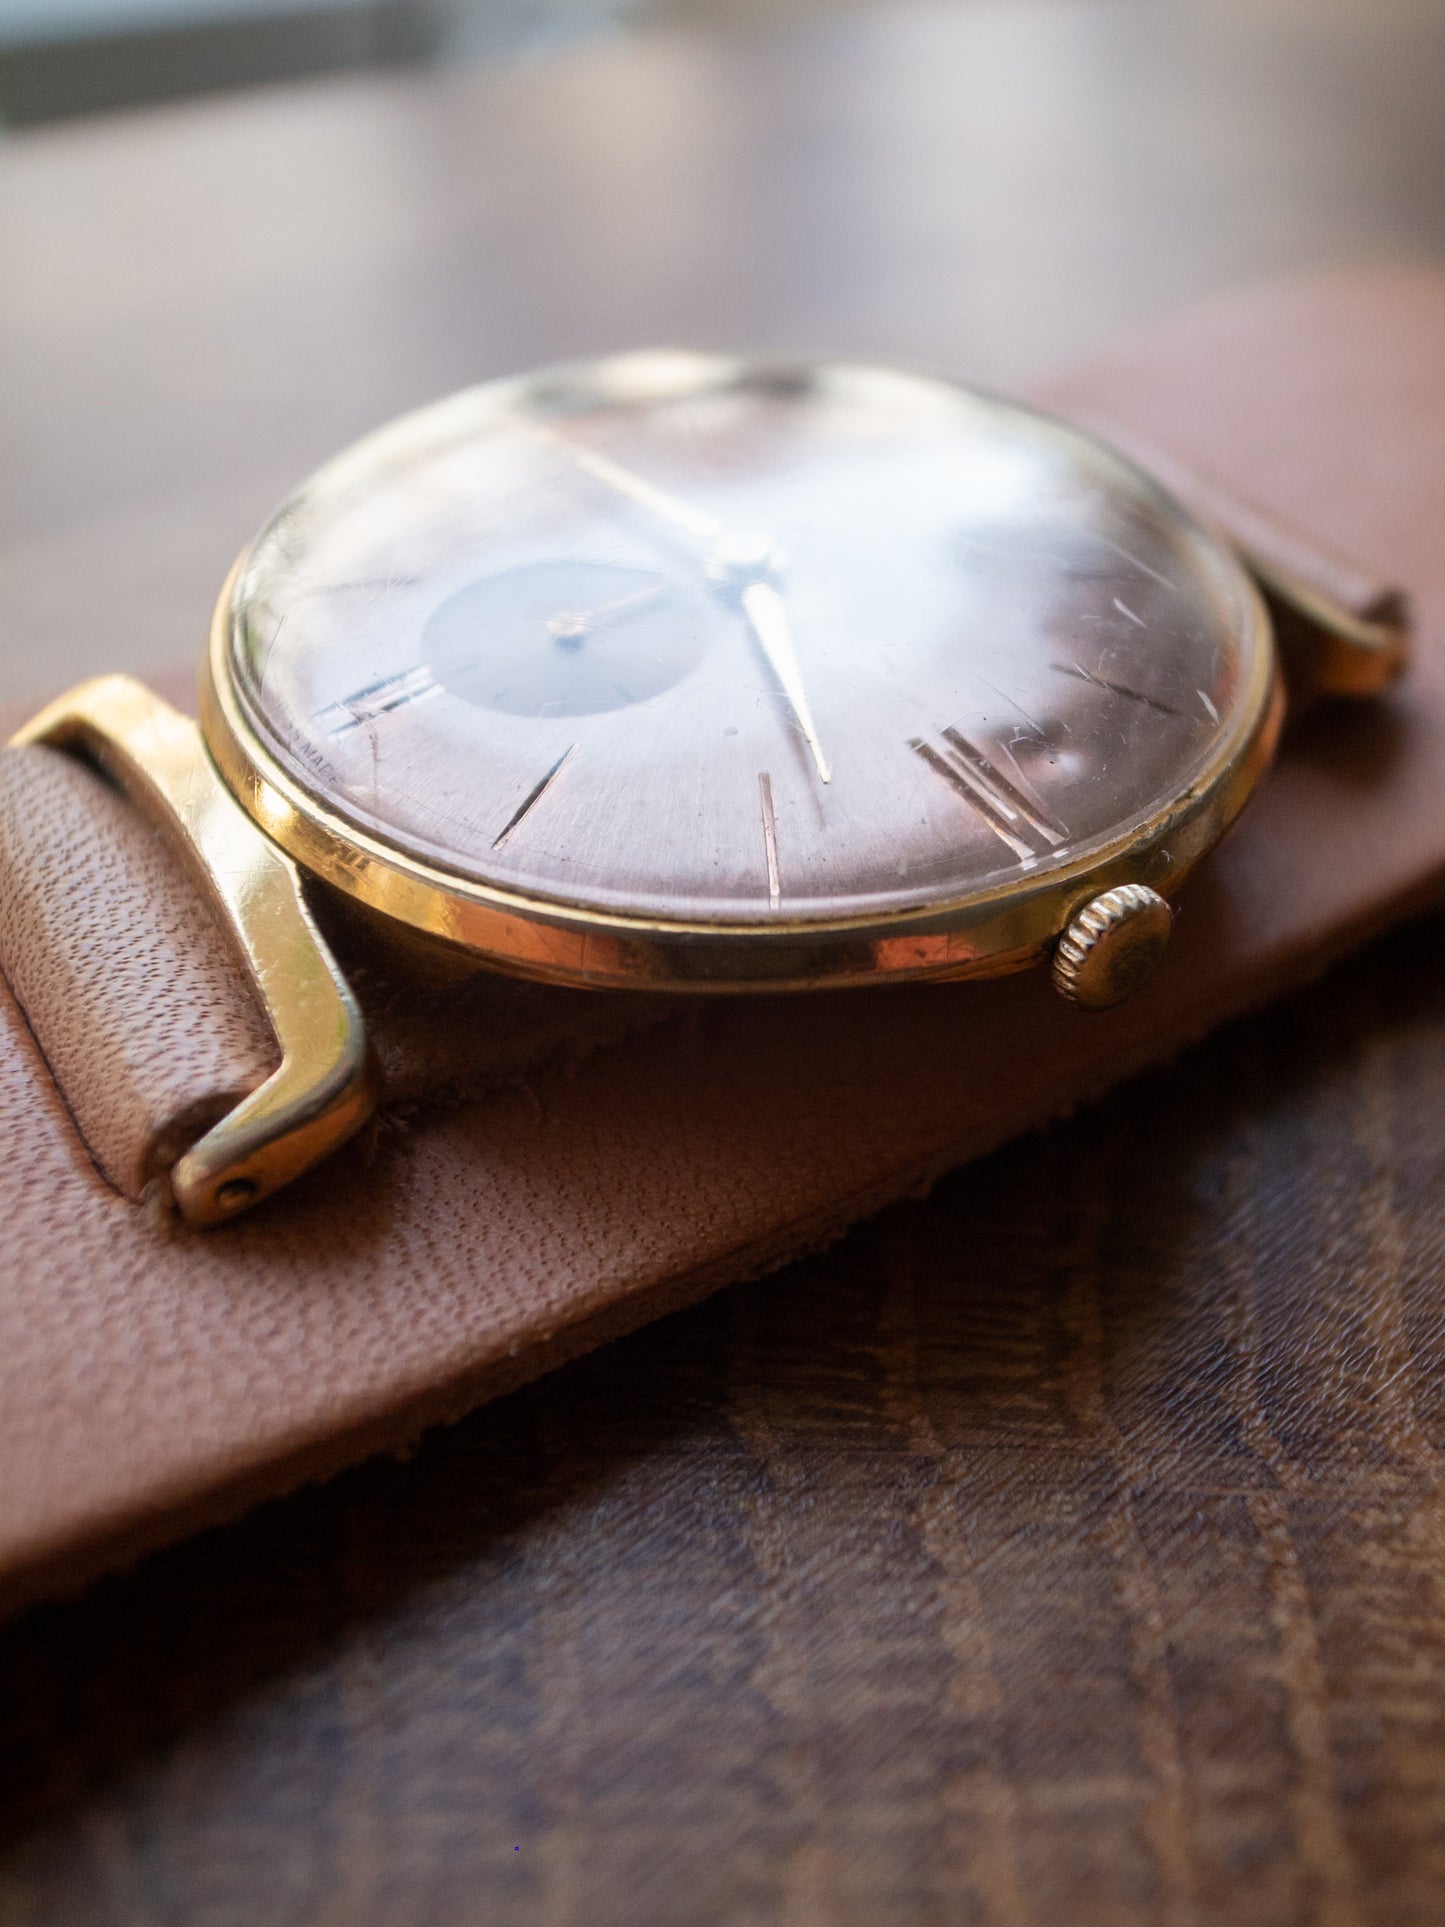 Avia King 17 Jewels Incabloc Swiss Made Vintage Watch